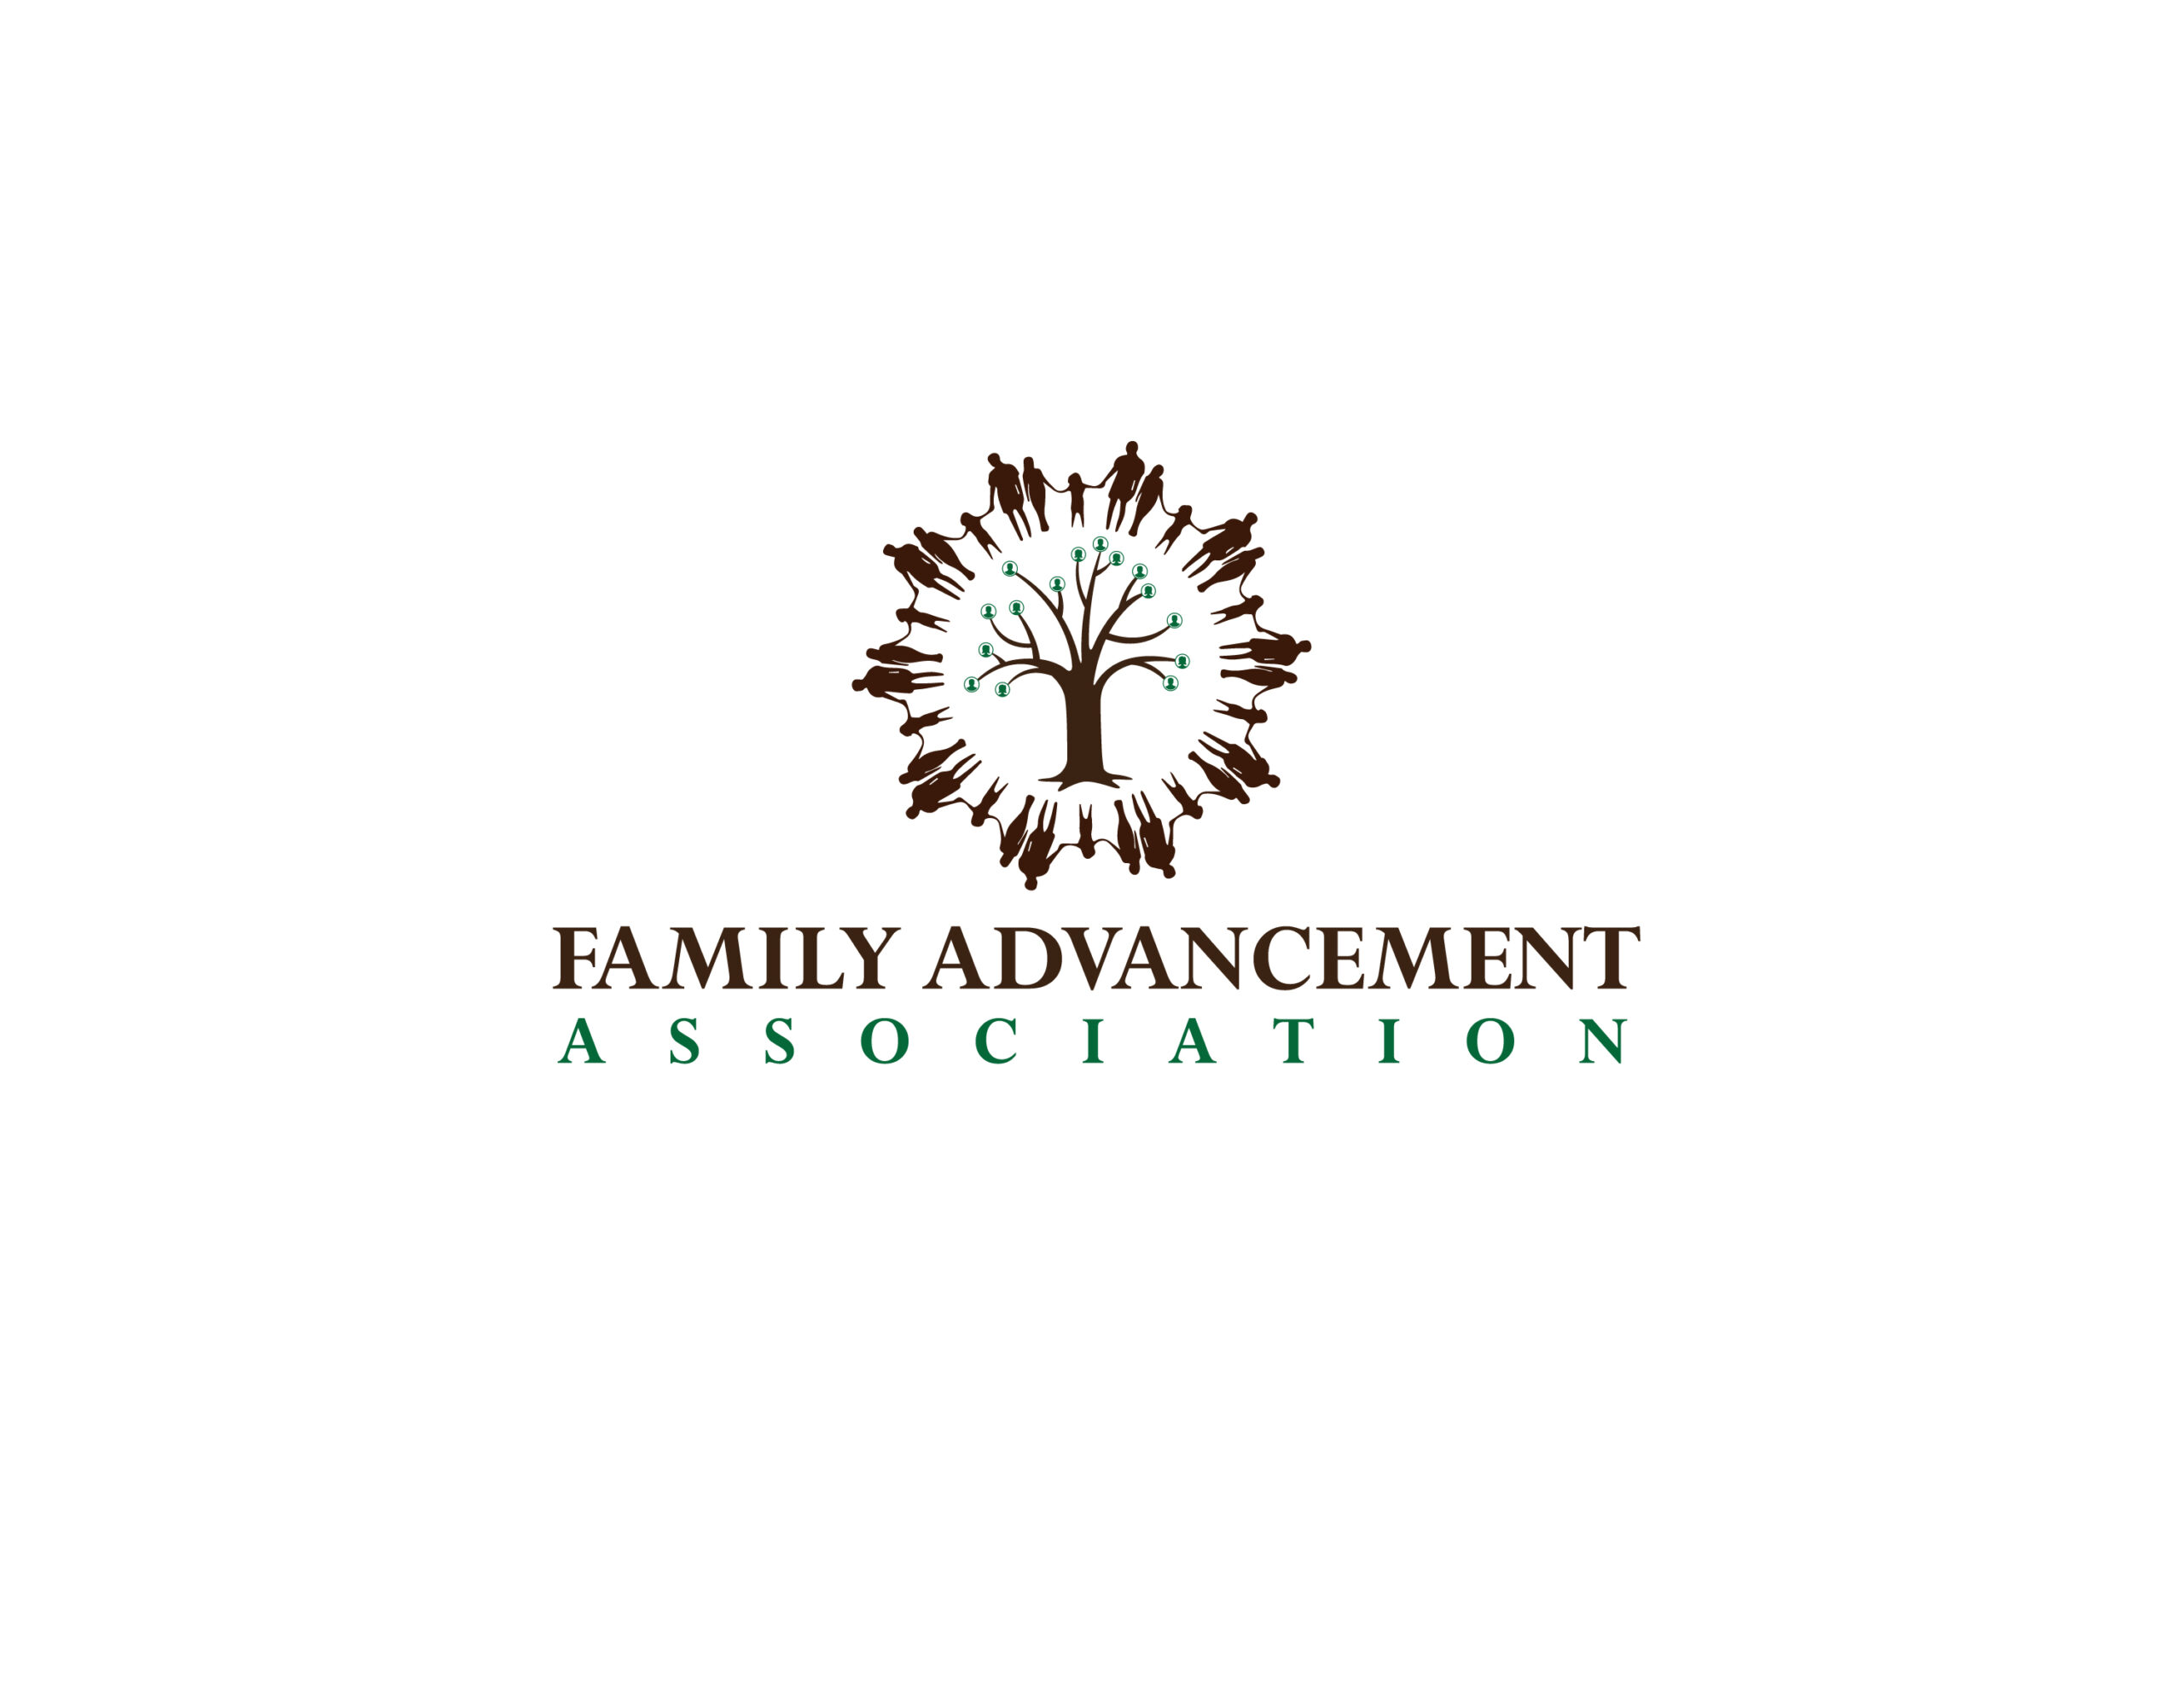 Family-Advancement-Association-1